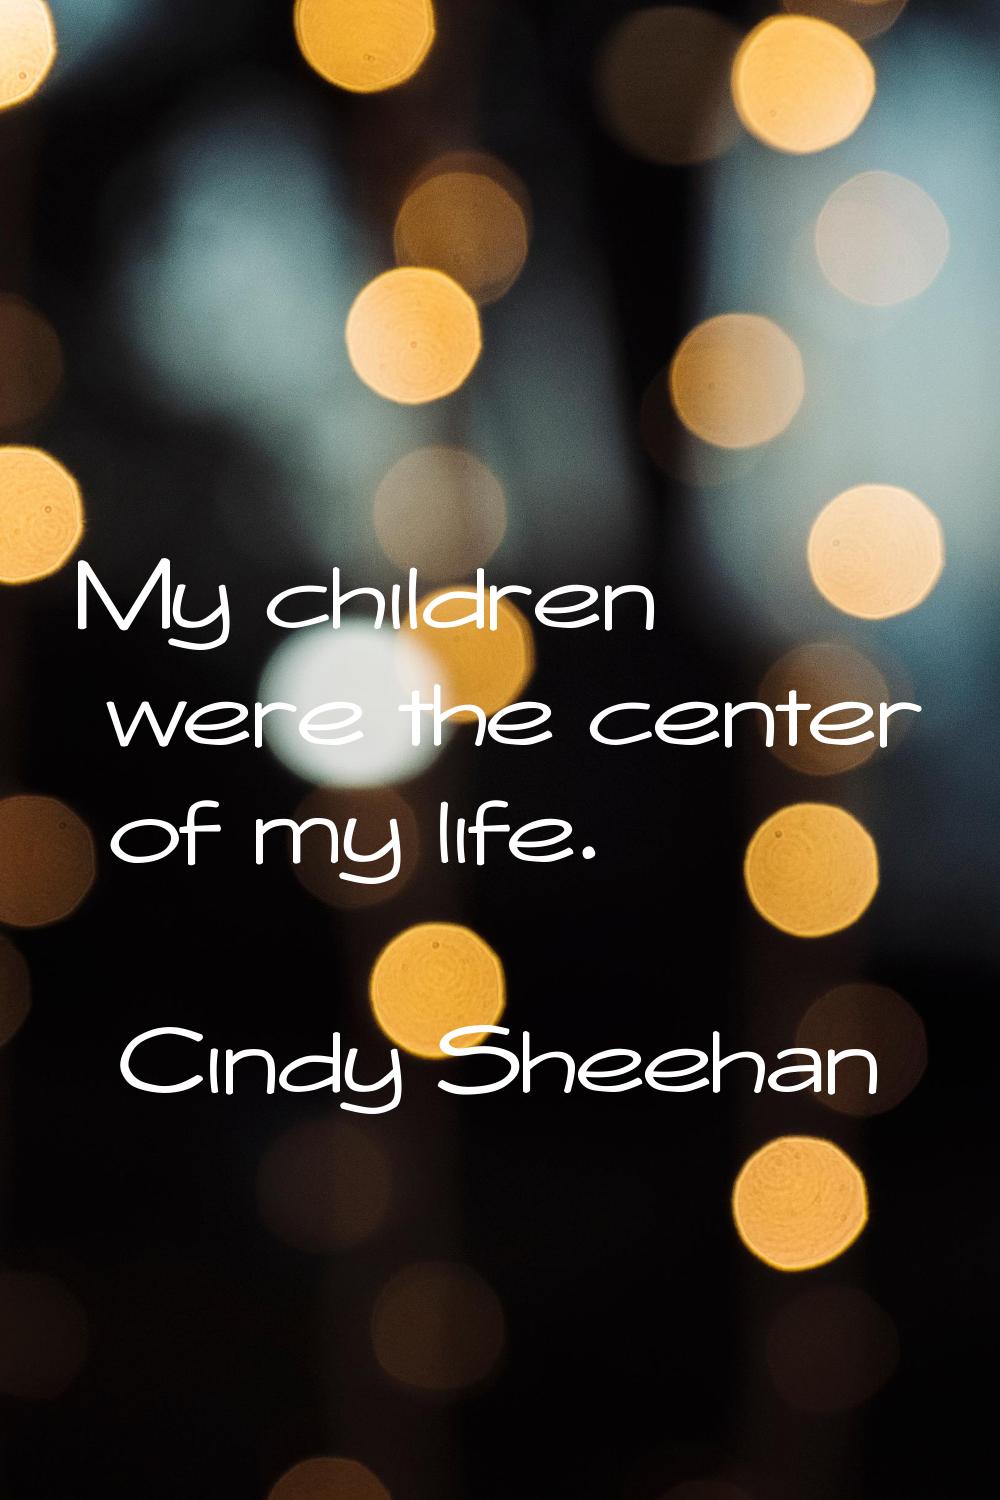 My children were the center of my life.